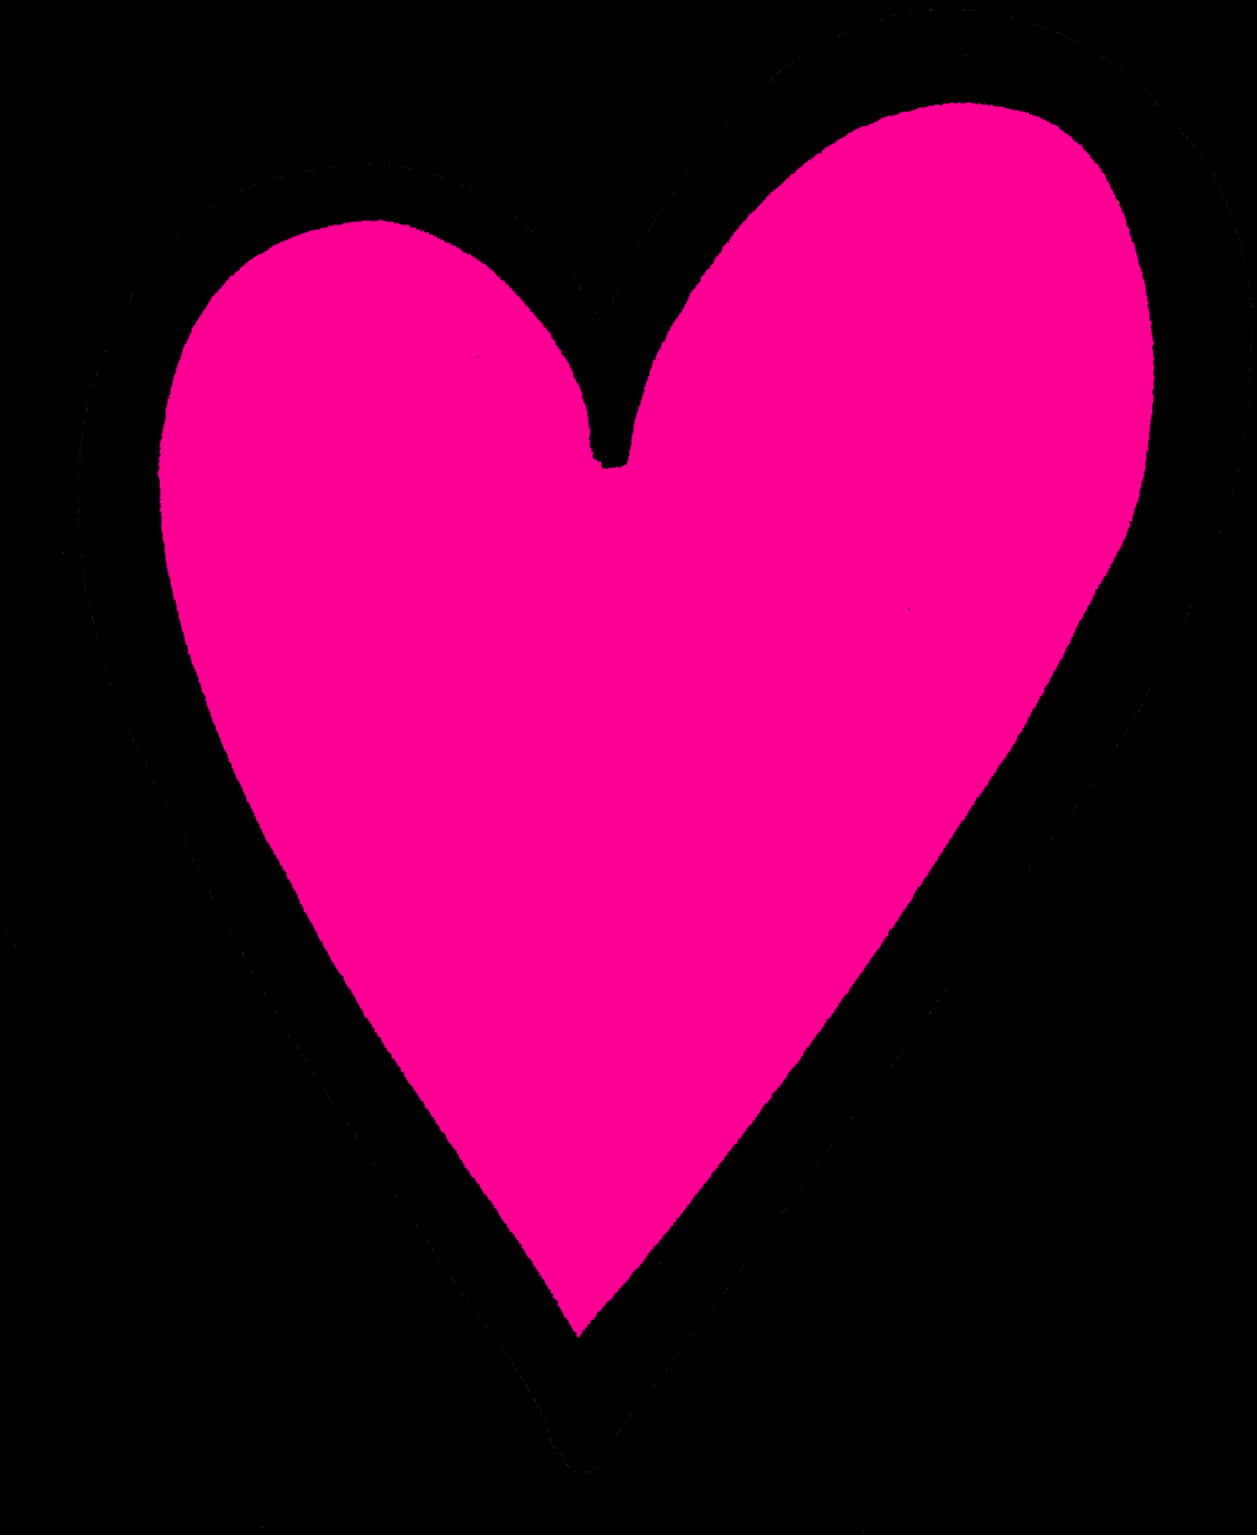 Vibrant Pink Heart Black Background PNG